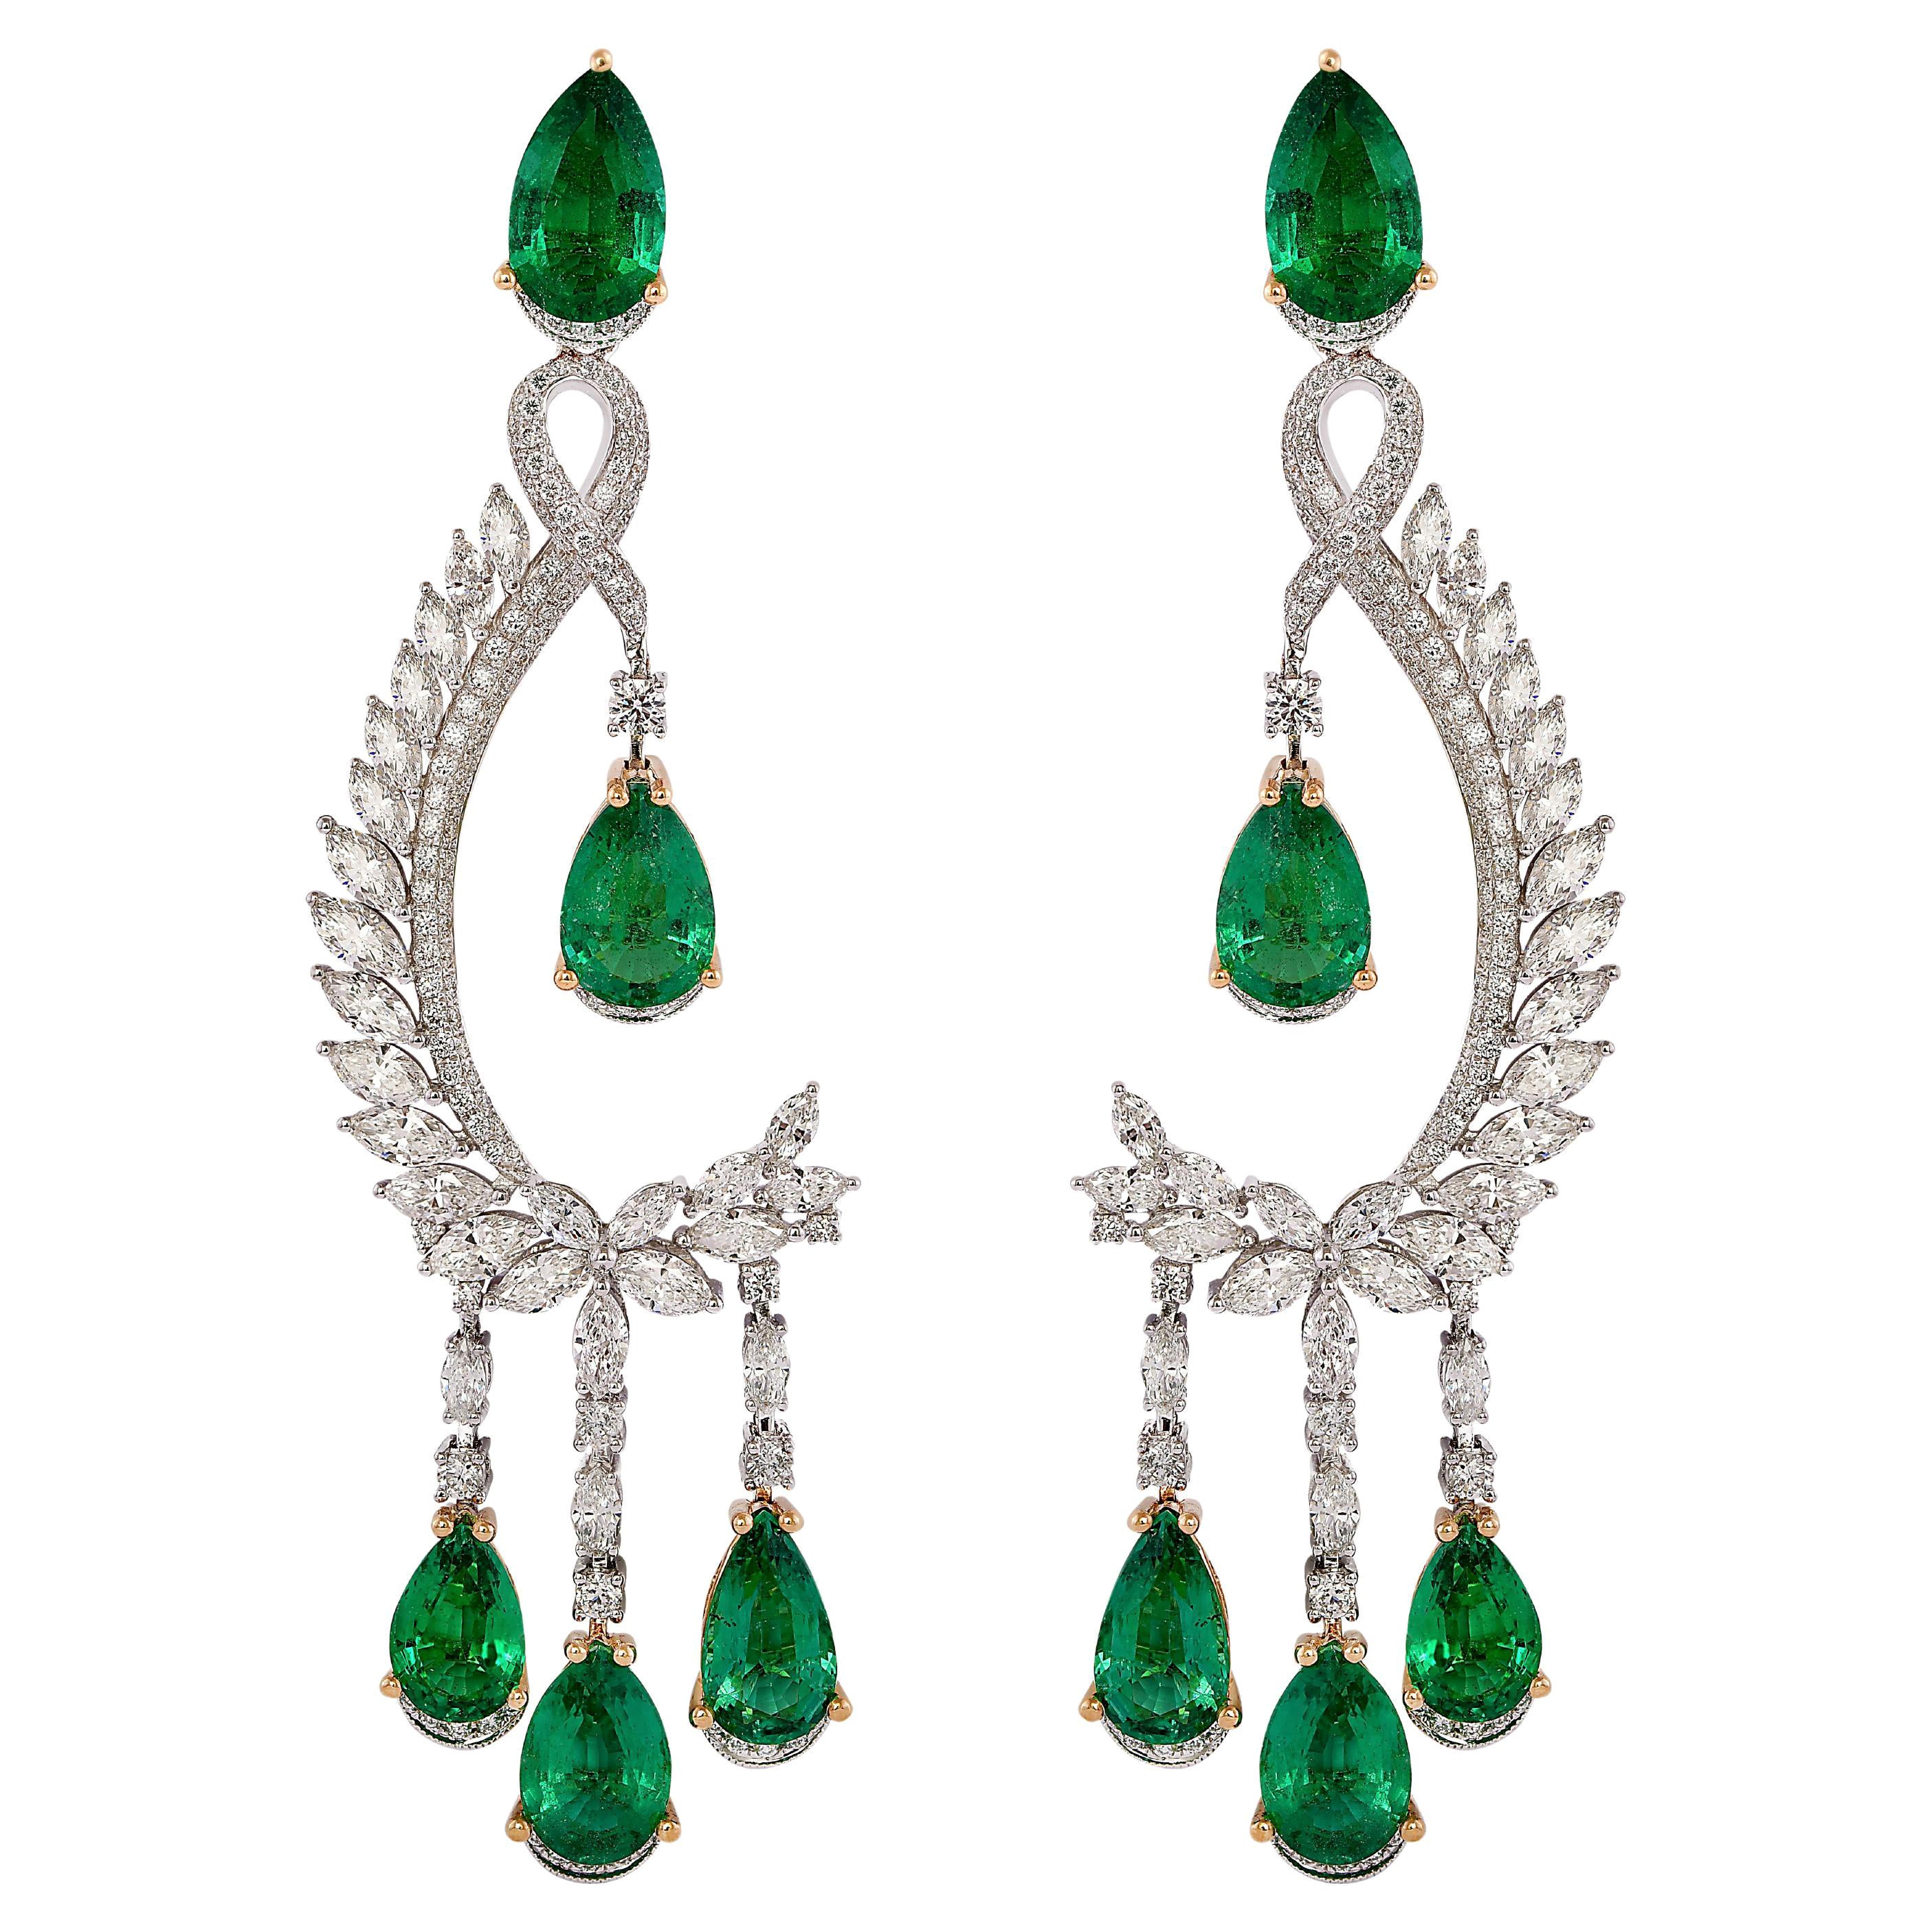 15 Carat Emerald and Diamond Earrings in 18 Karat White & Yellow Gold